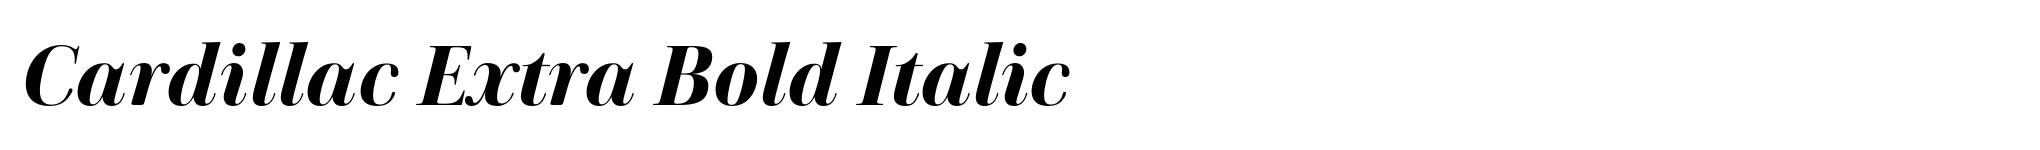 Cardillac Extra Bold Italic image